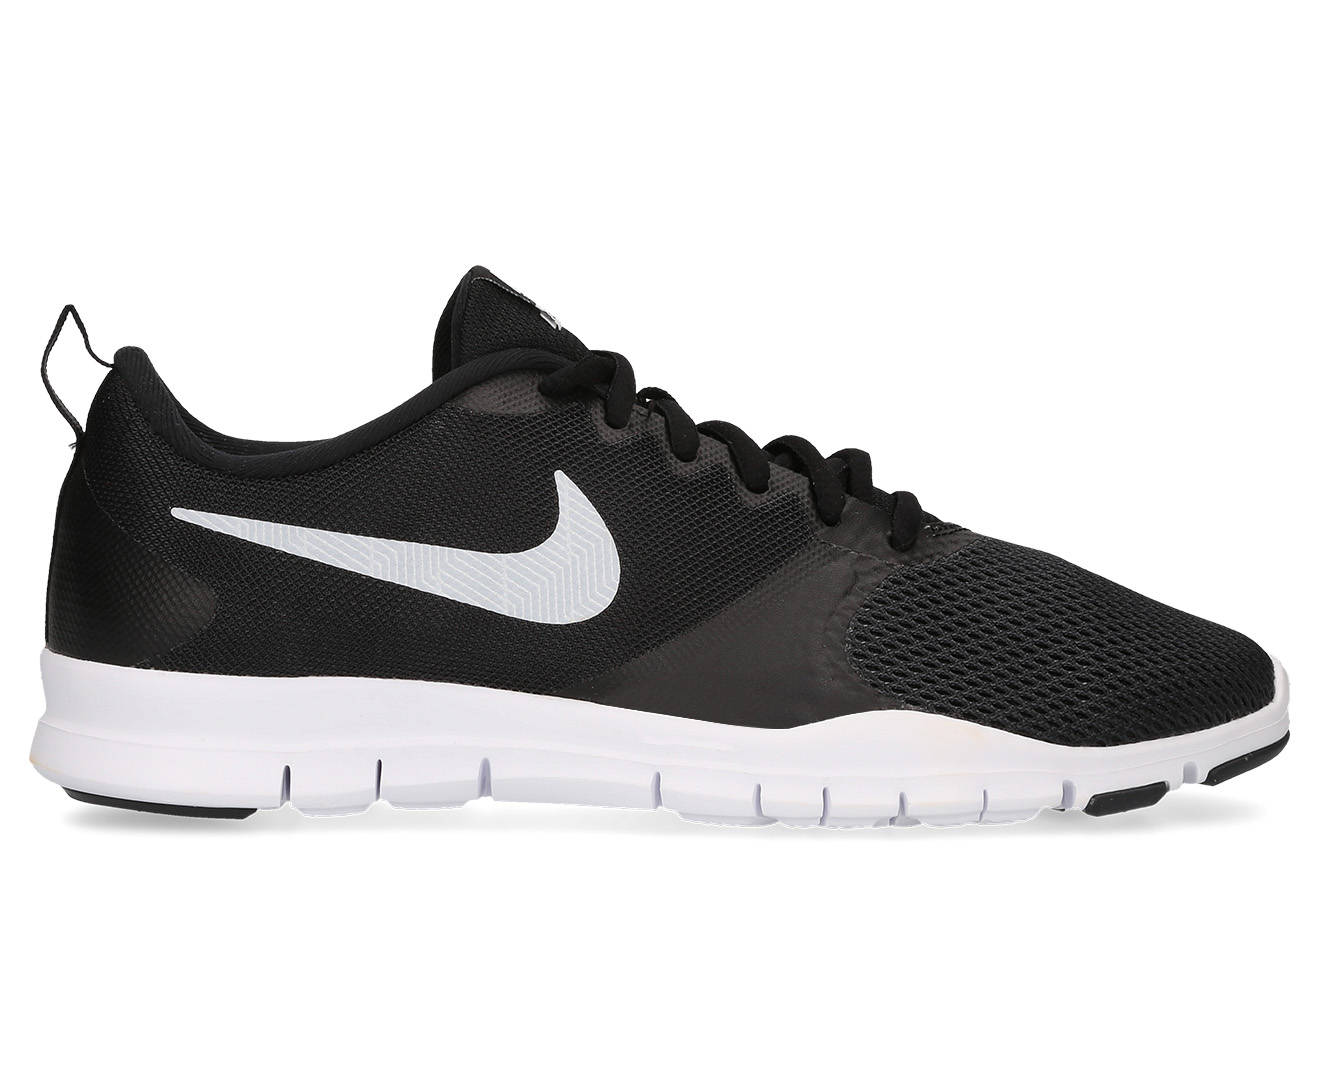 Nike Women's Flex TR Sports Shoes - Black/Black-White | Catch.com.au